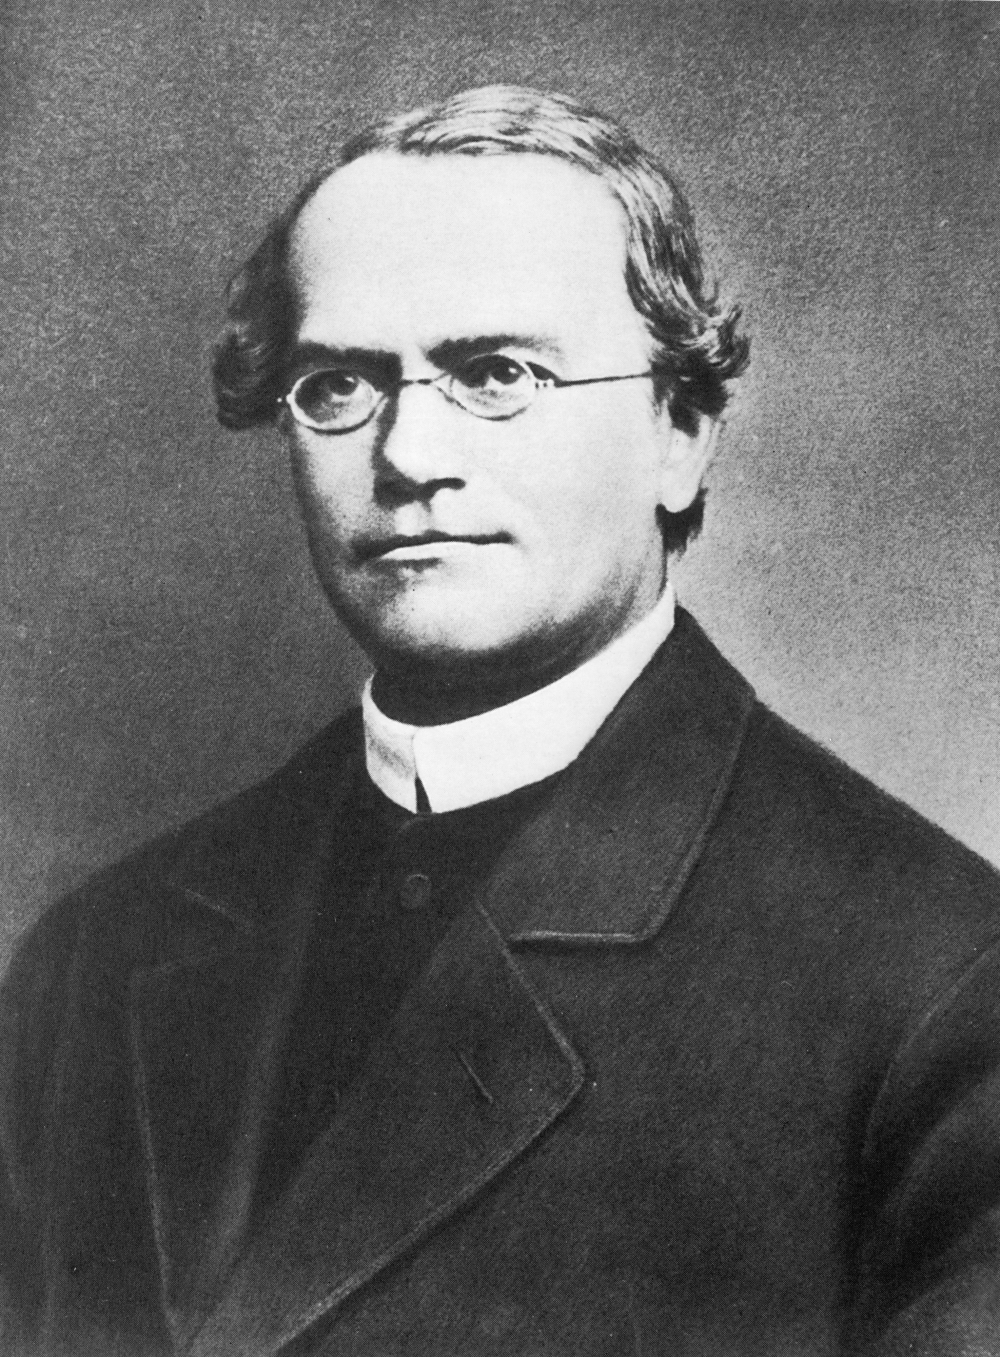 who was Gregor Mendel